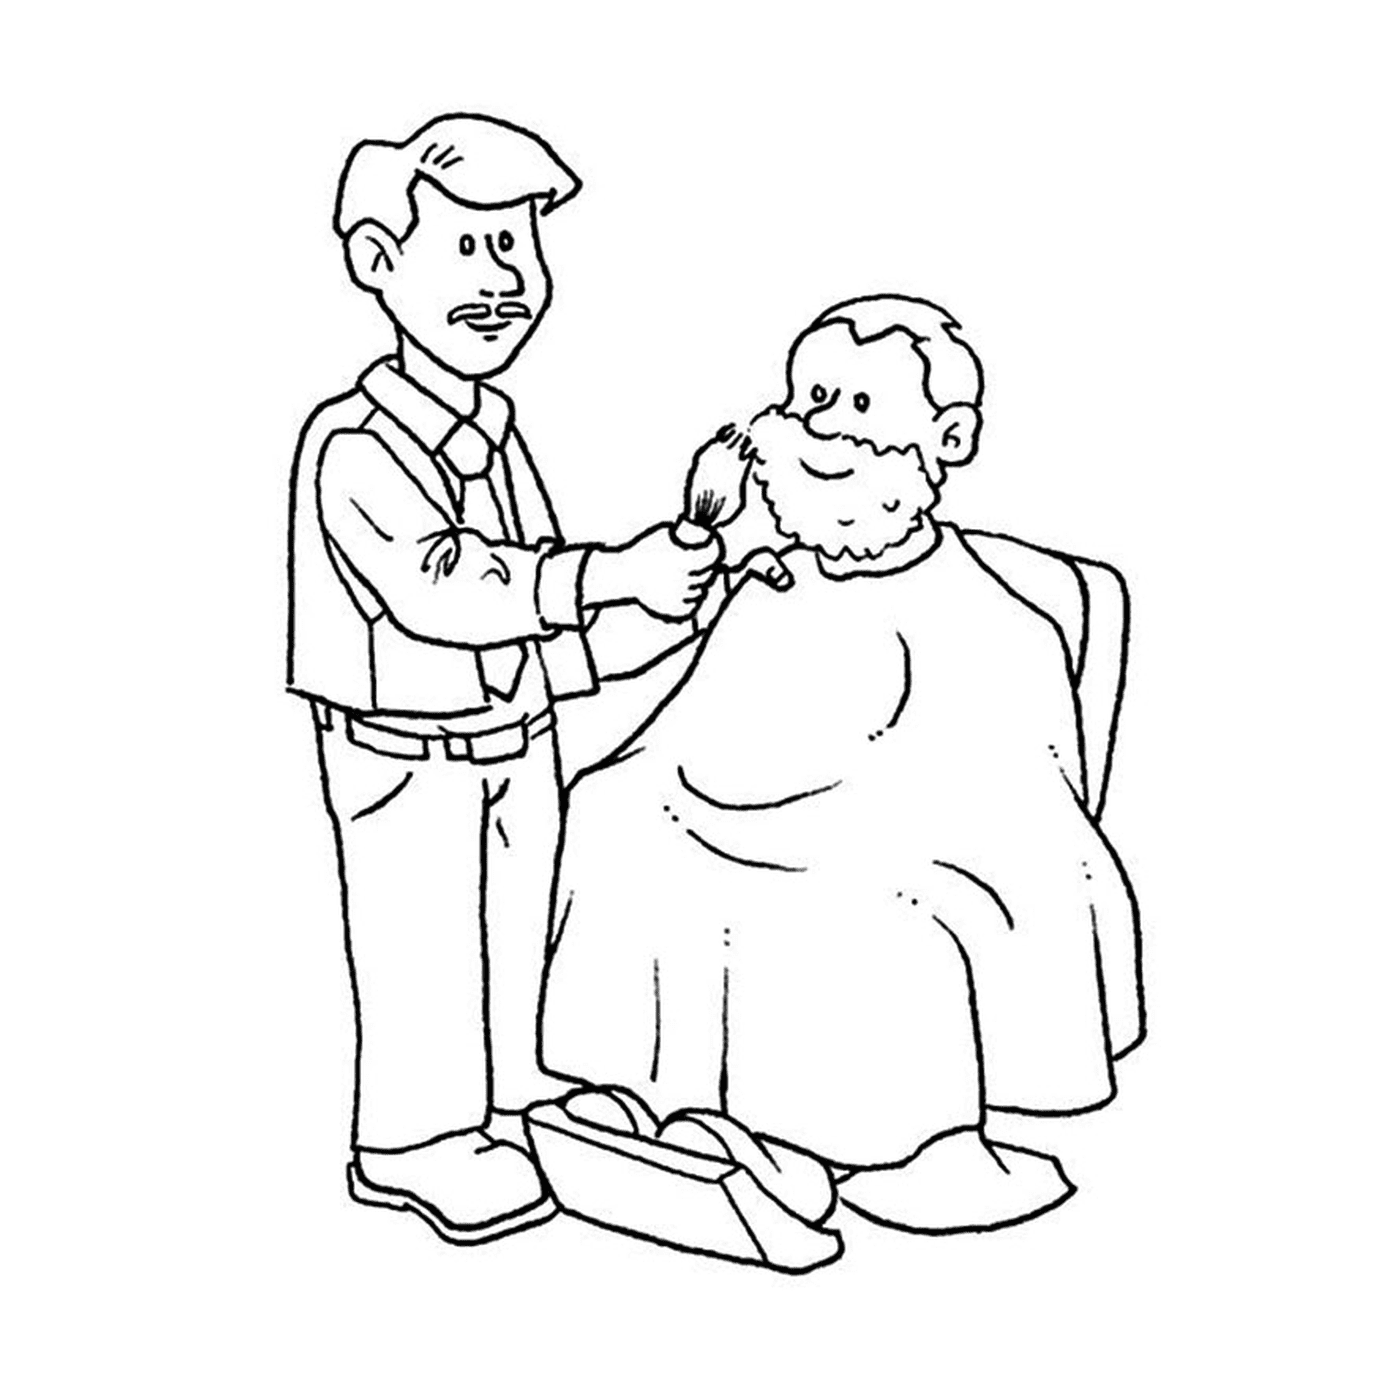  باربر باربر مع رجل عجوز يقص شعره من قبل حلاق 